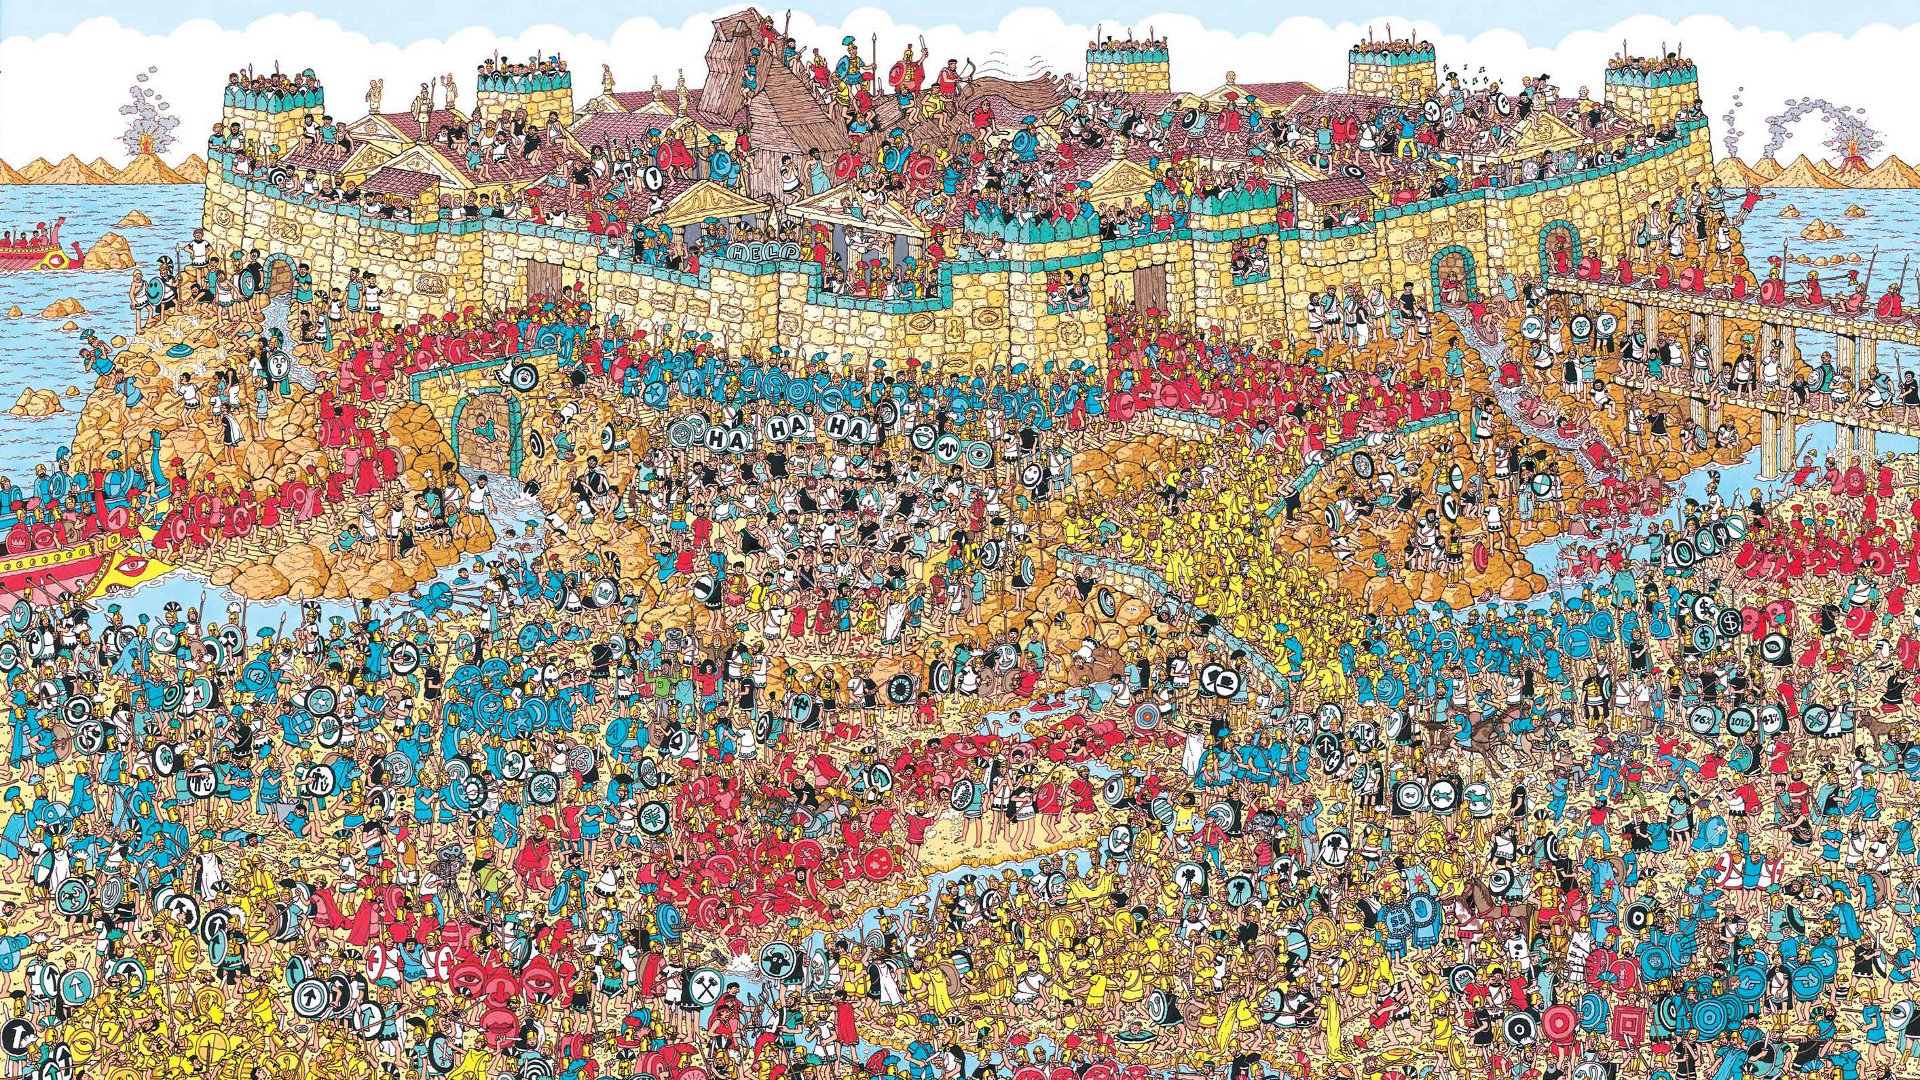 Waldo Puzzles Wheres Wally 1920x1080